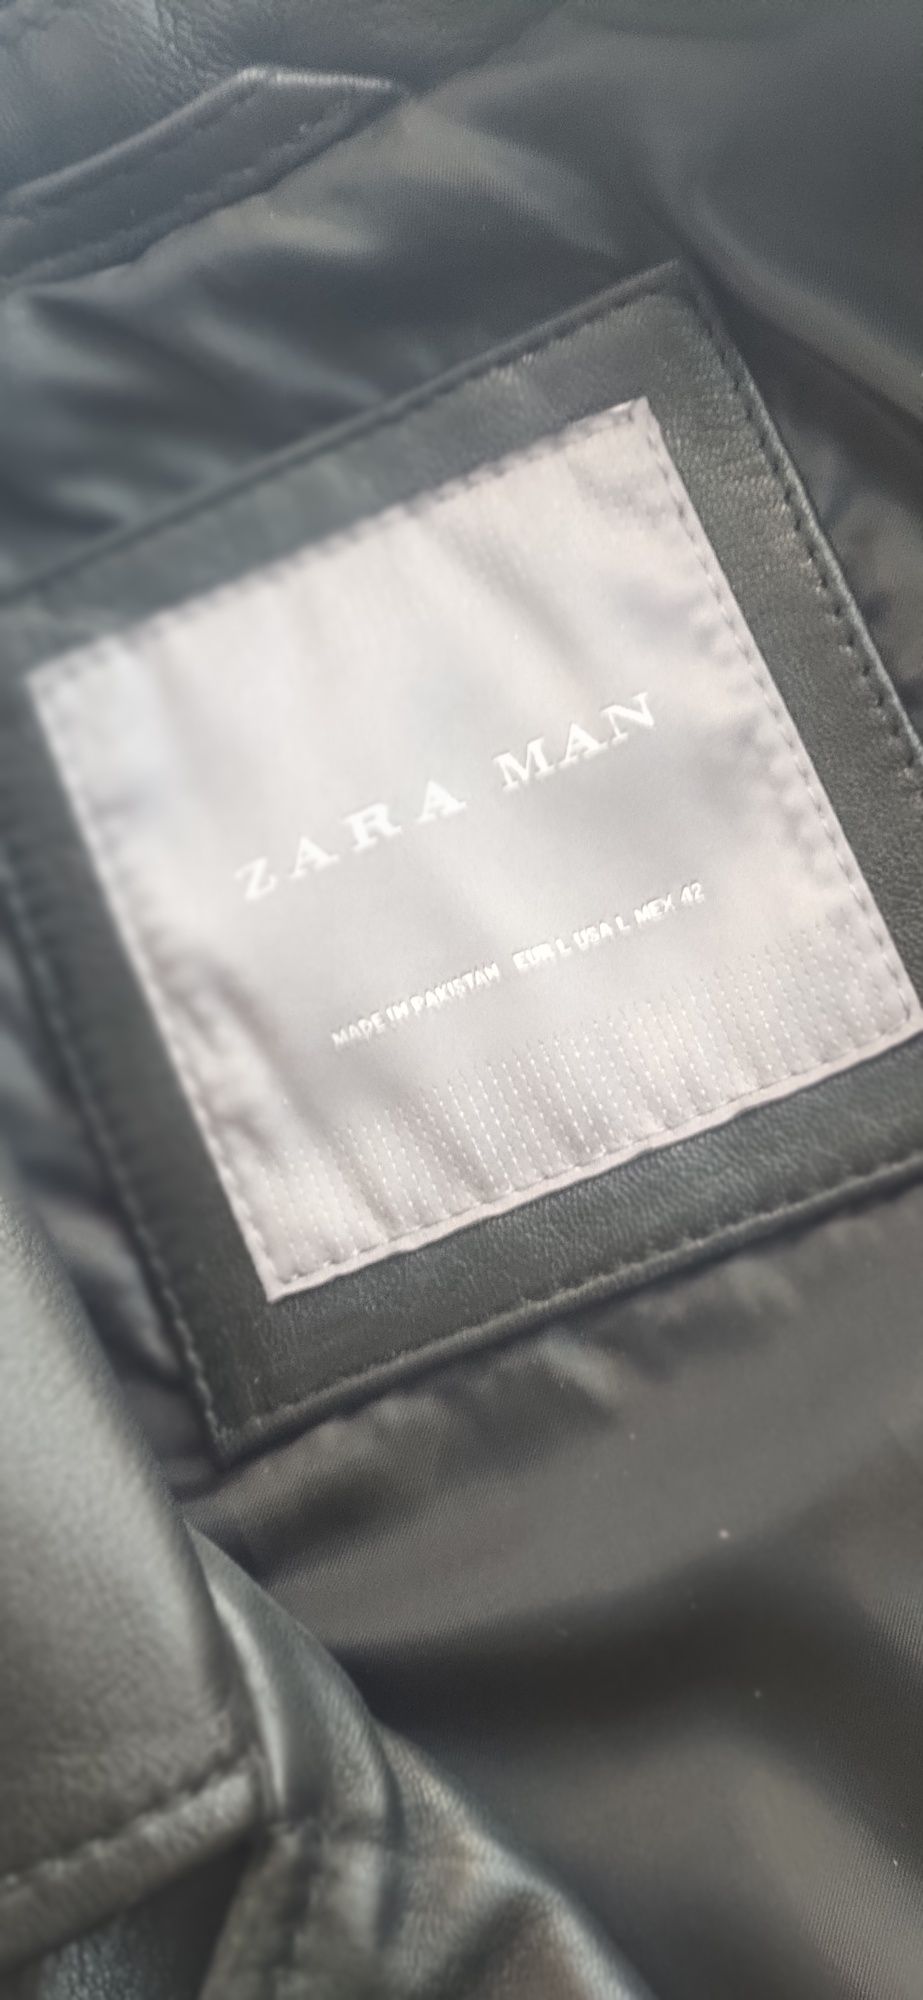 Casaco em pele Zara leather jacket L estilo motard homem